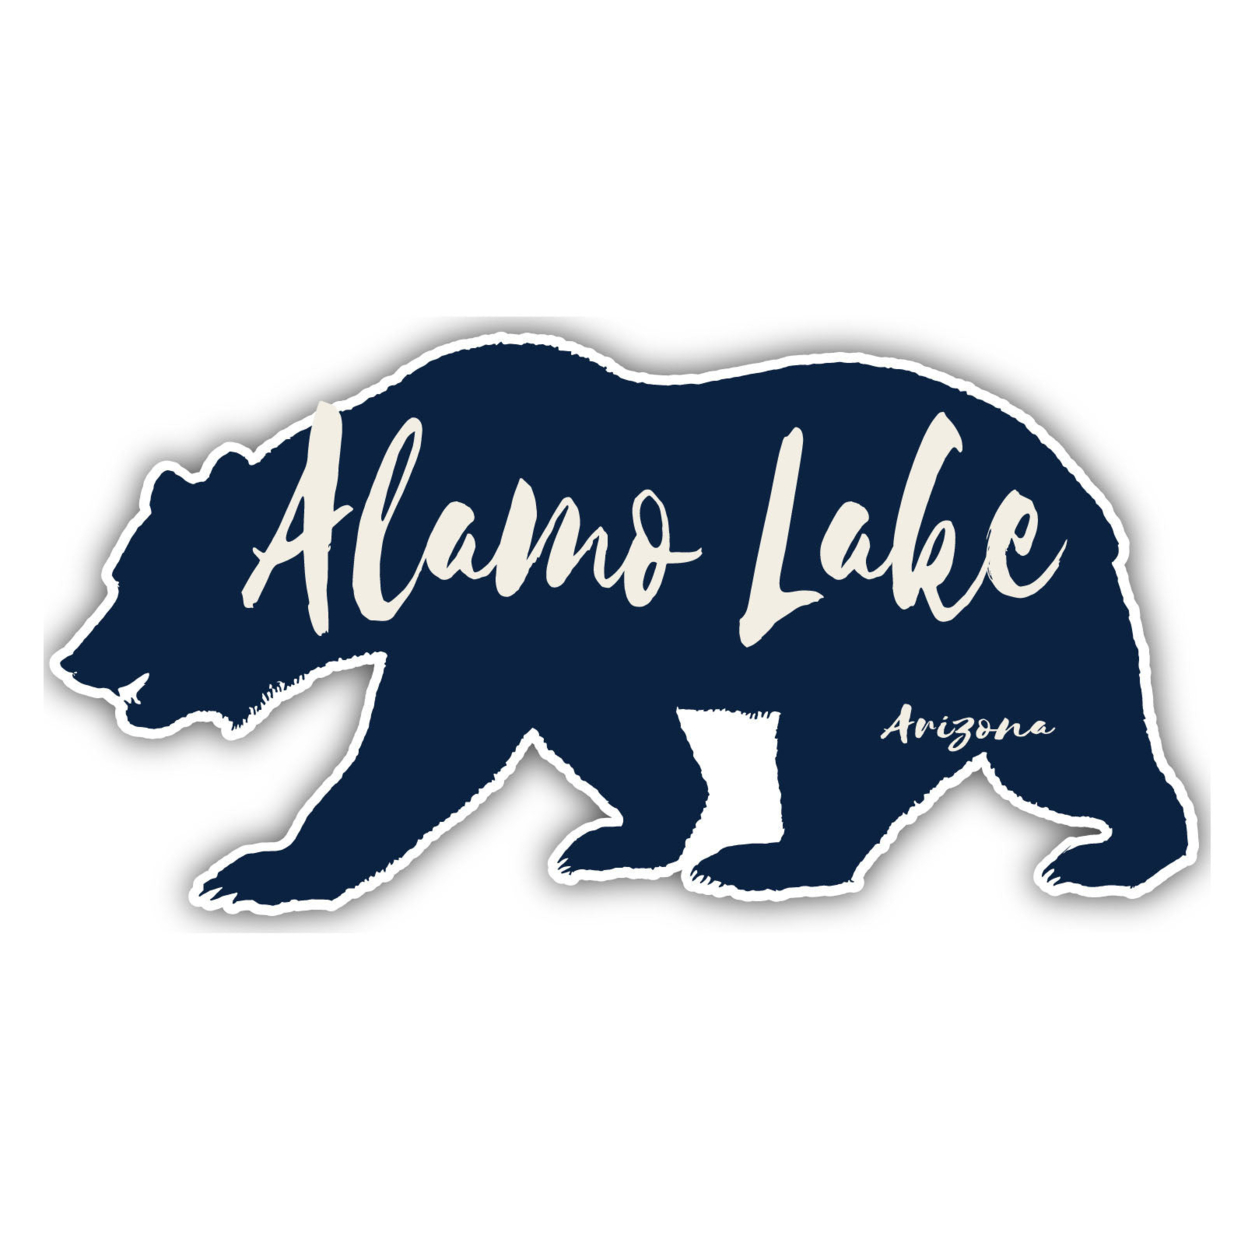 Alamo Lake Arizona Souvenir Decorative Stickers (Choose Theme And Size) - Single Unit, 4-Inch, Tent